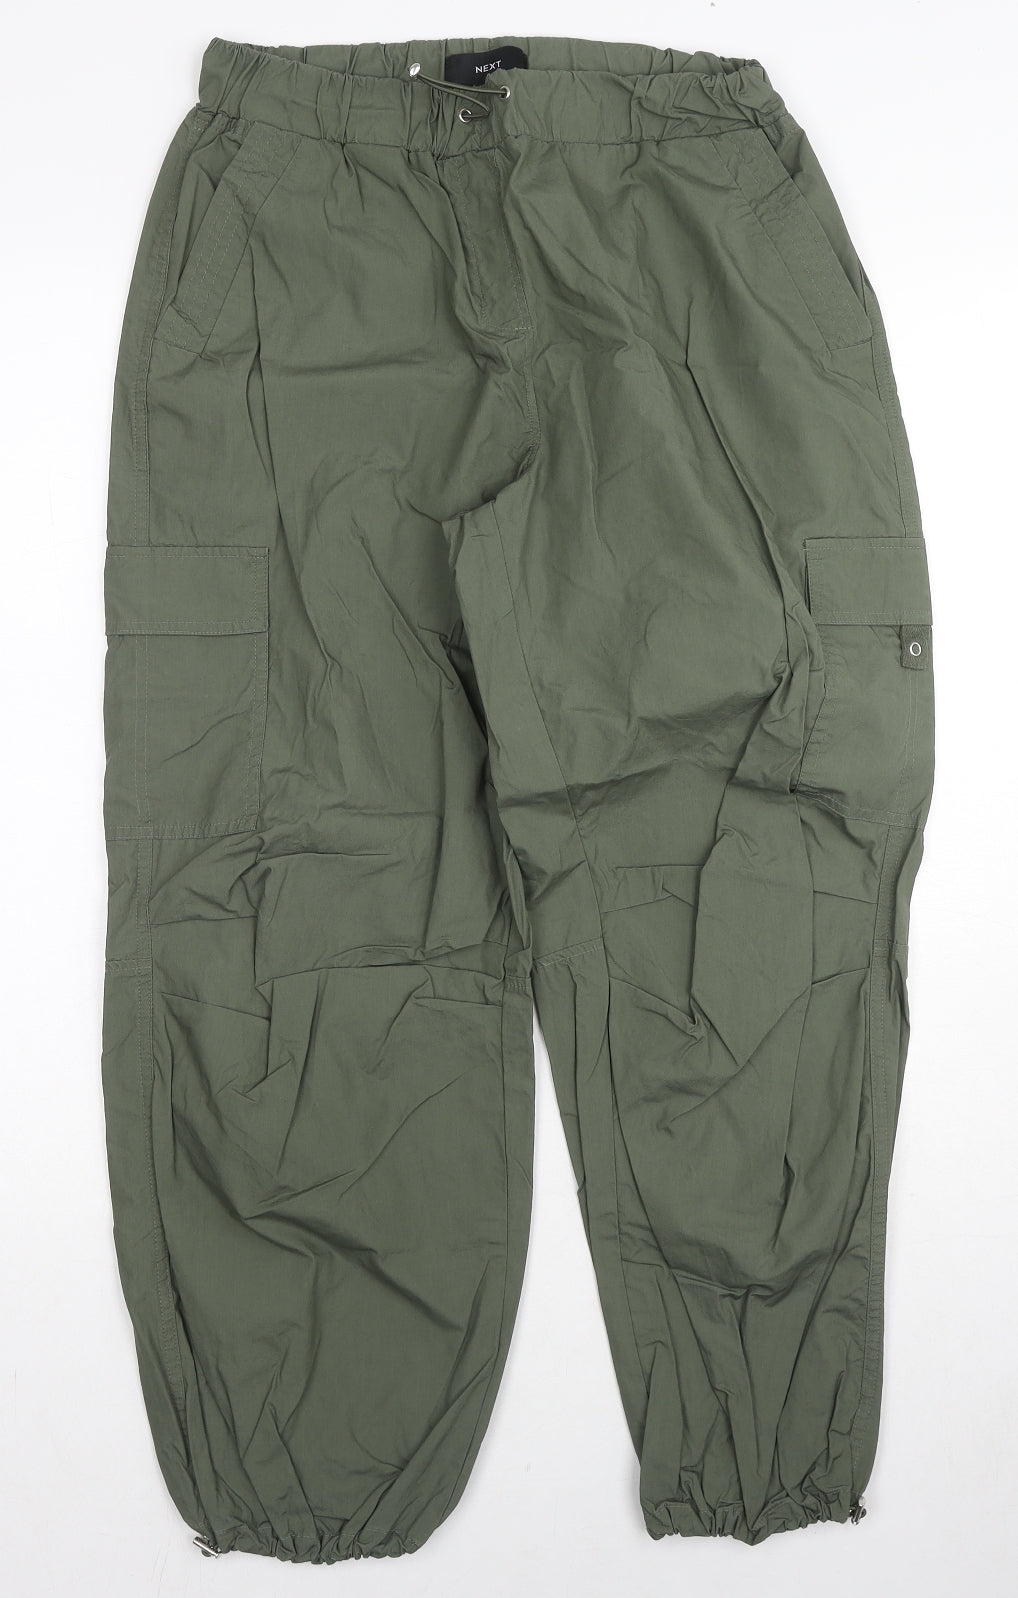 NEXT Womens Green Cotton Cargo Trousers Size S L26 in Regular Drawstring - Drawstring Hem